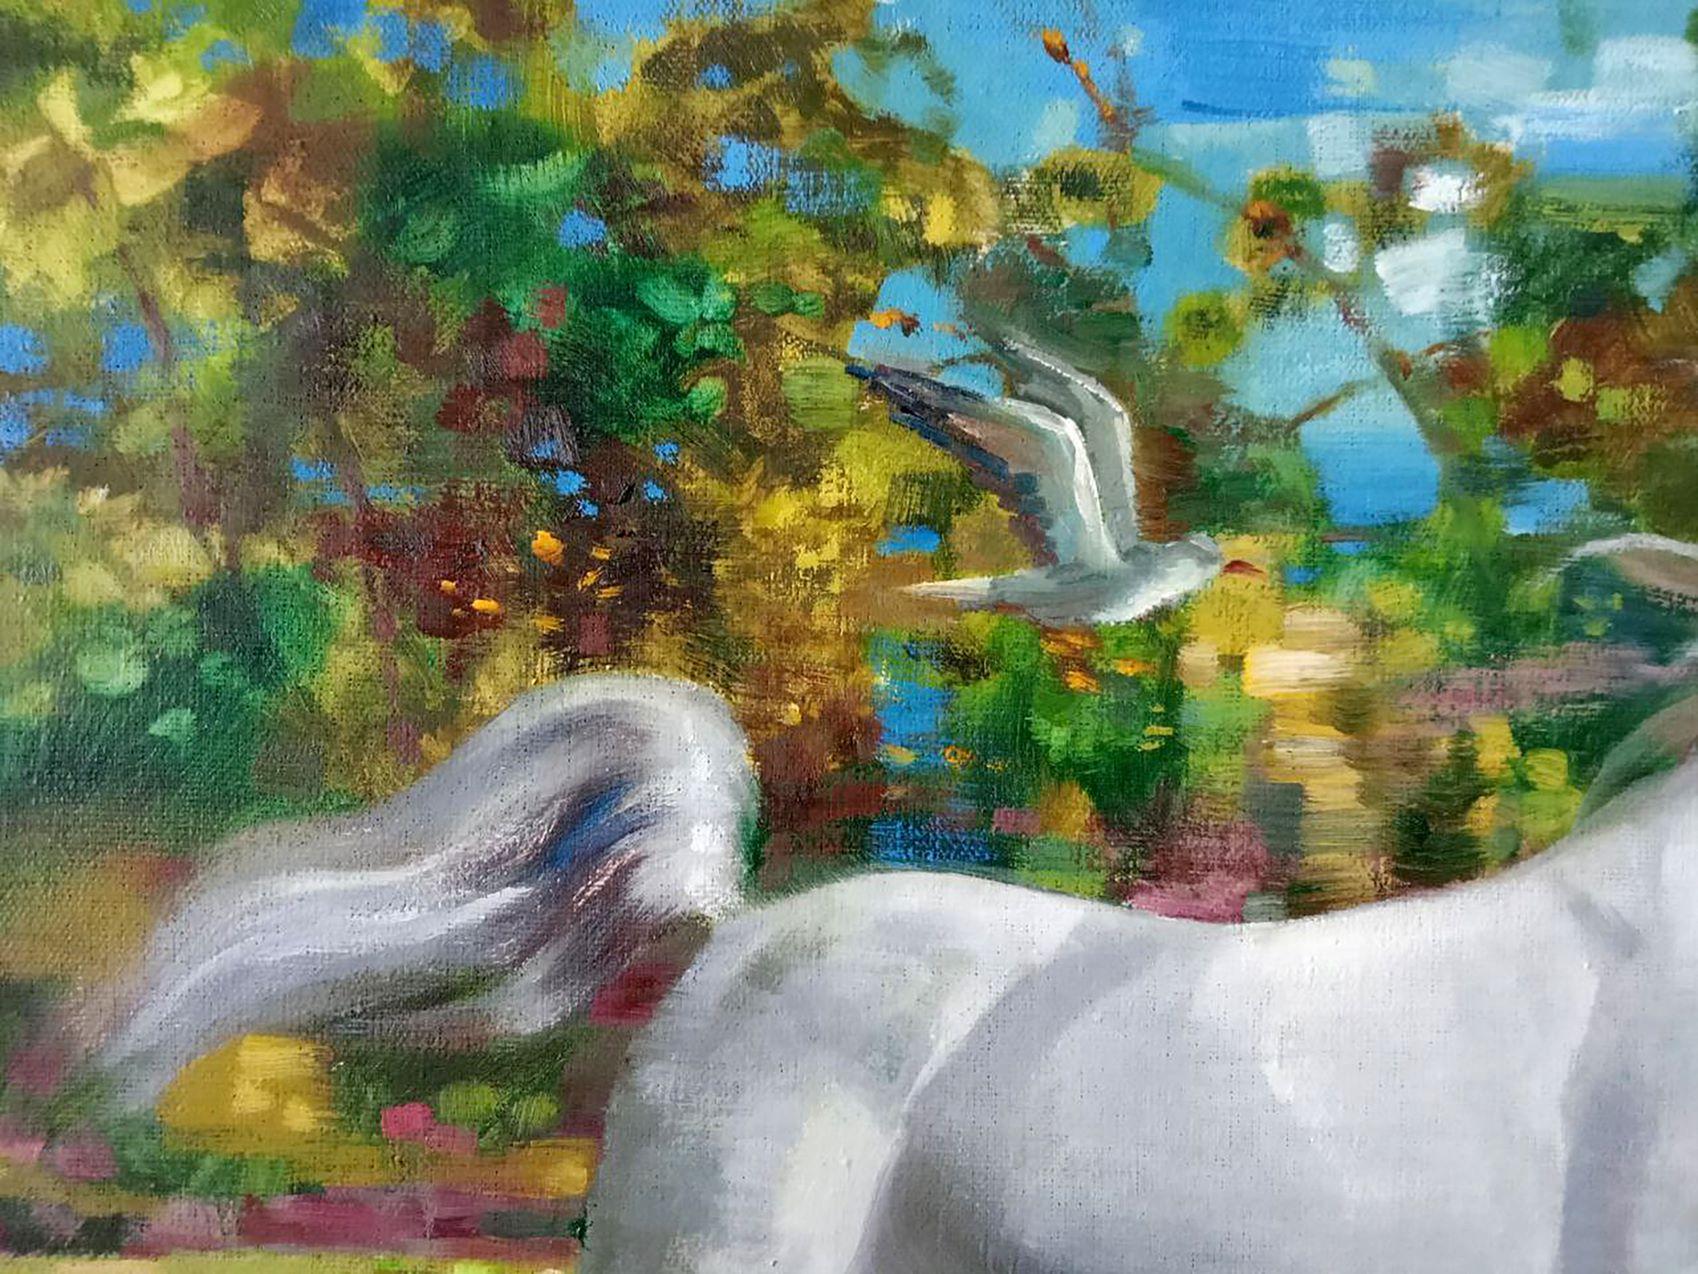 Artist: Anatoly Borisovich Tarabanov
Work: Original oil painting, handmade artwork, one of a kind 
Medium: Oil on Canvas 
Year: 2017
Style: Impressionism
Title: Wind in the Mane
Size: 23.5